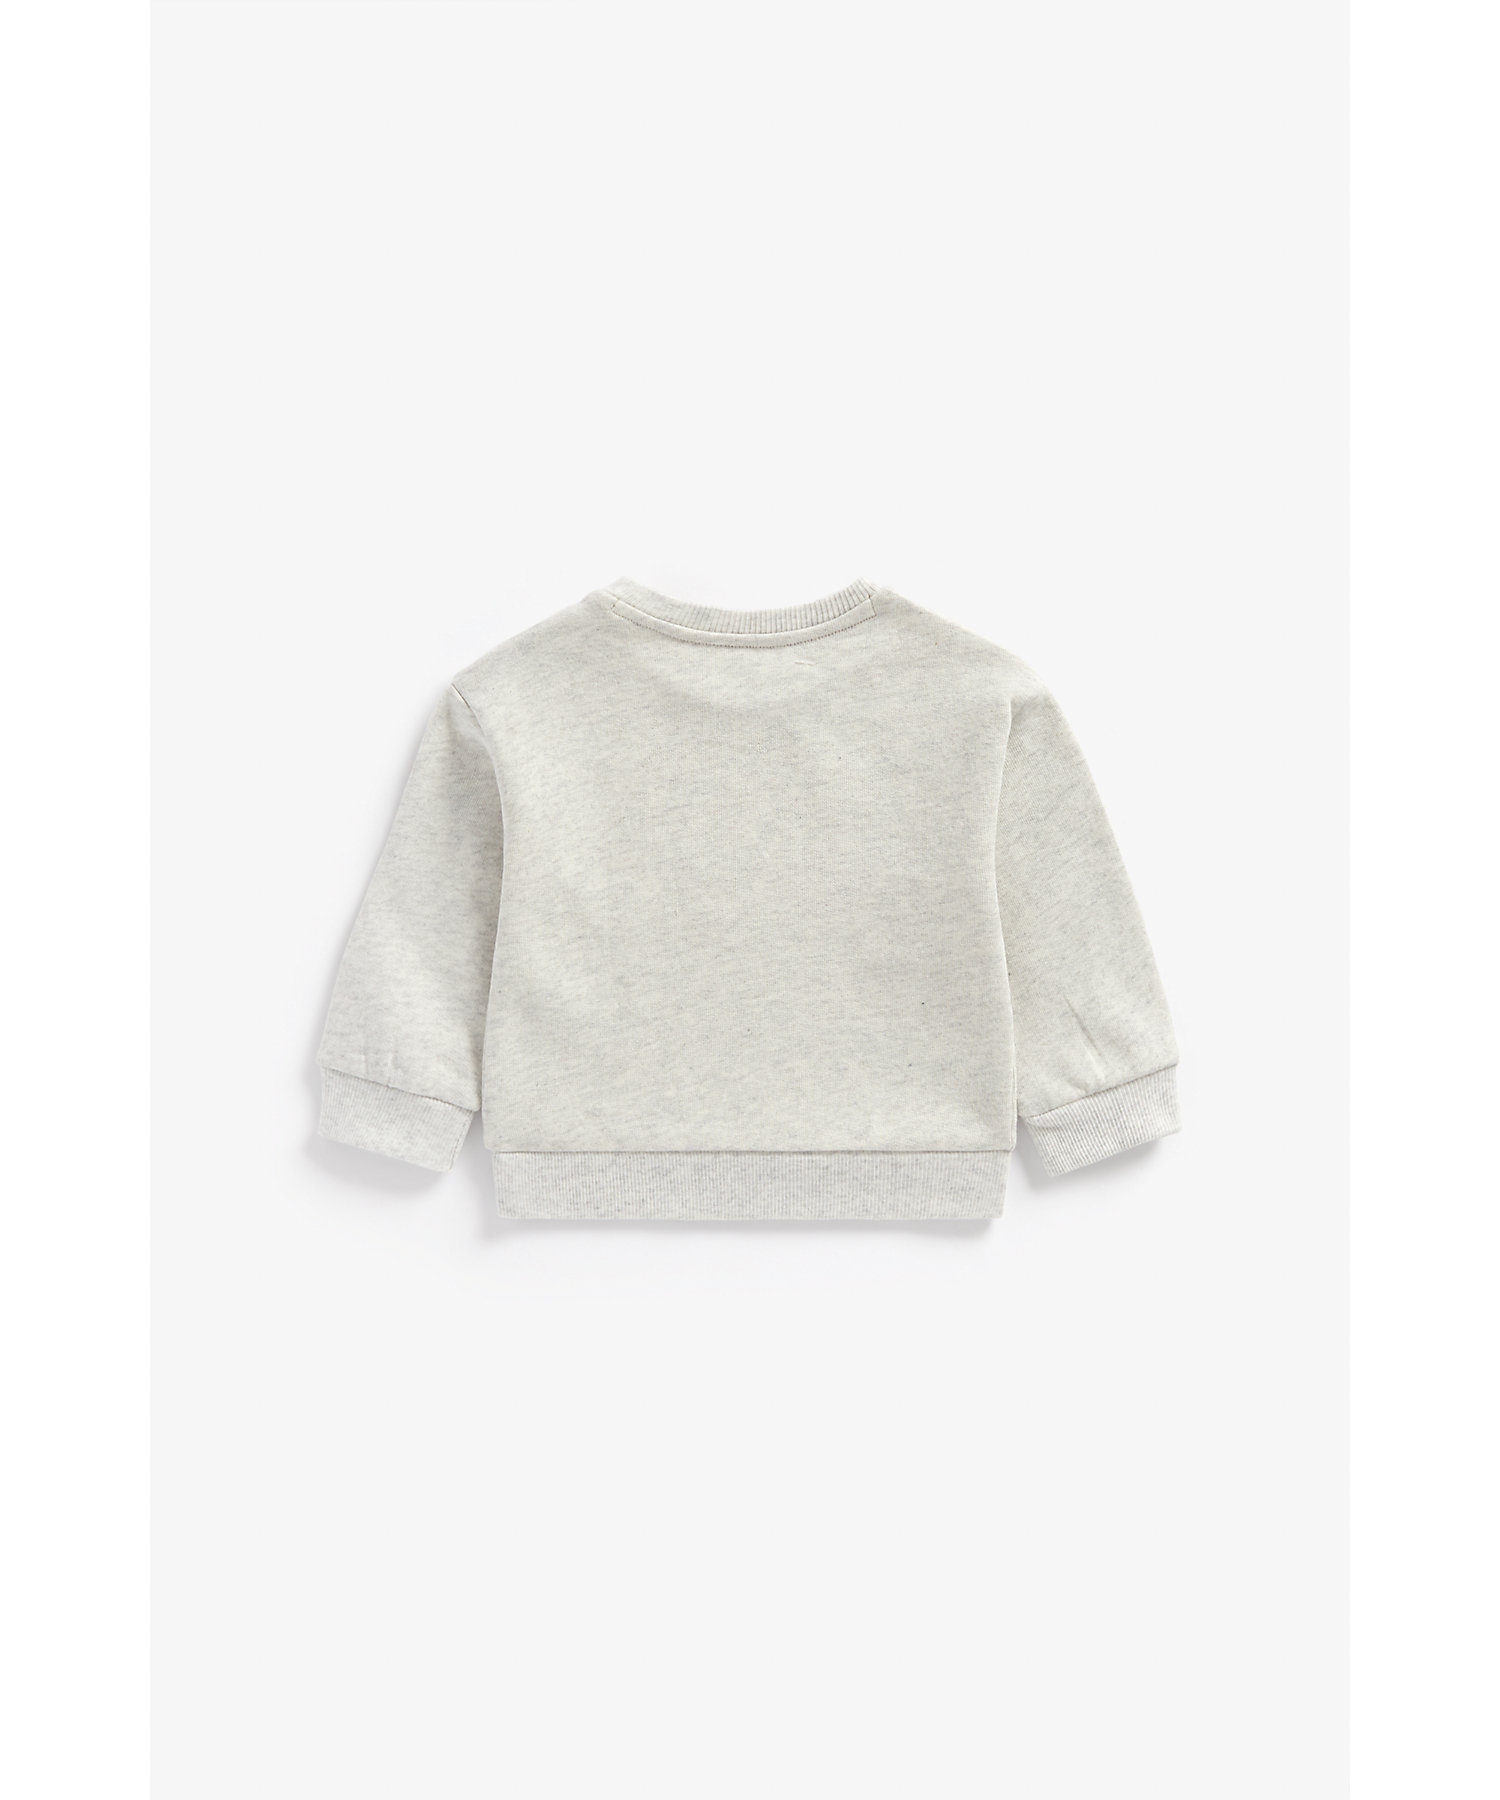 Mothercare | Girls Full Sleeves Sweatshirt Floral Design - Grey 1